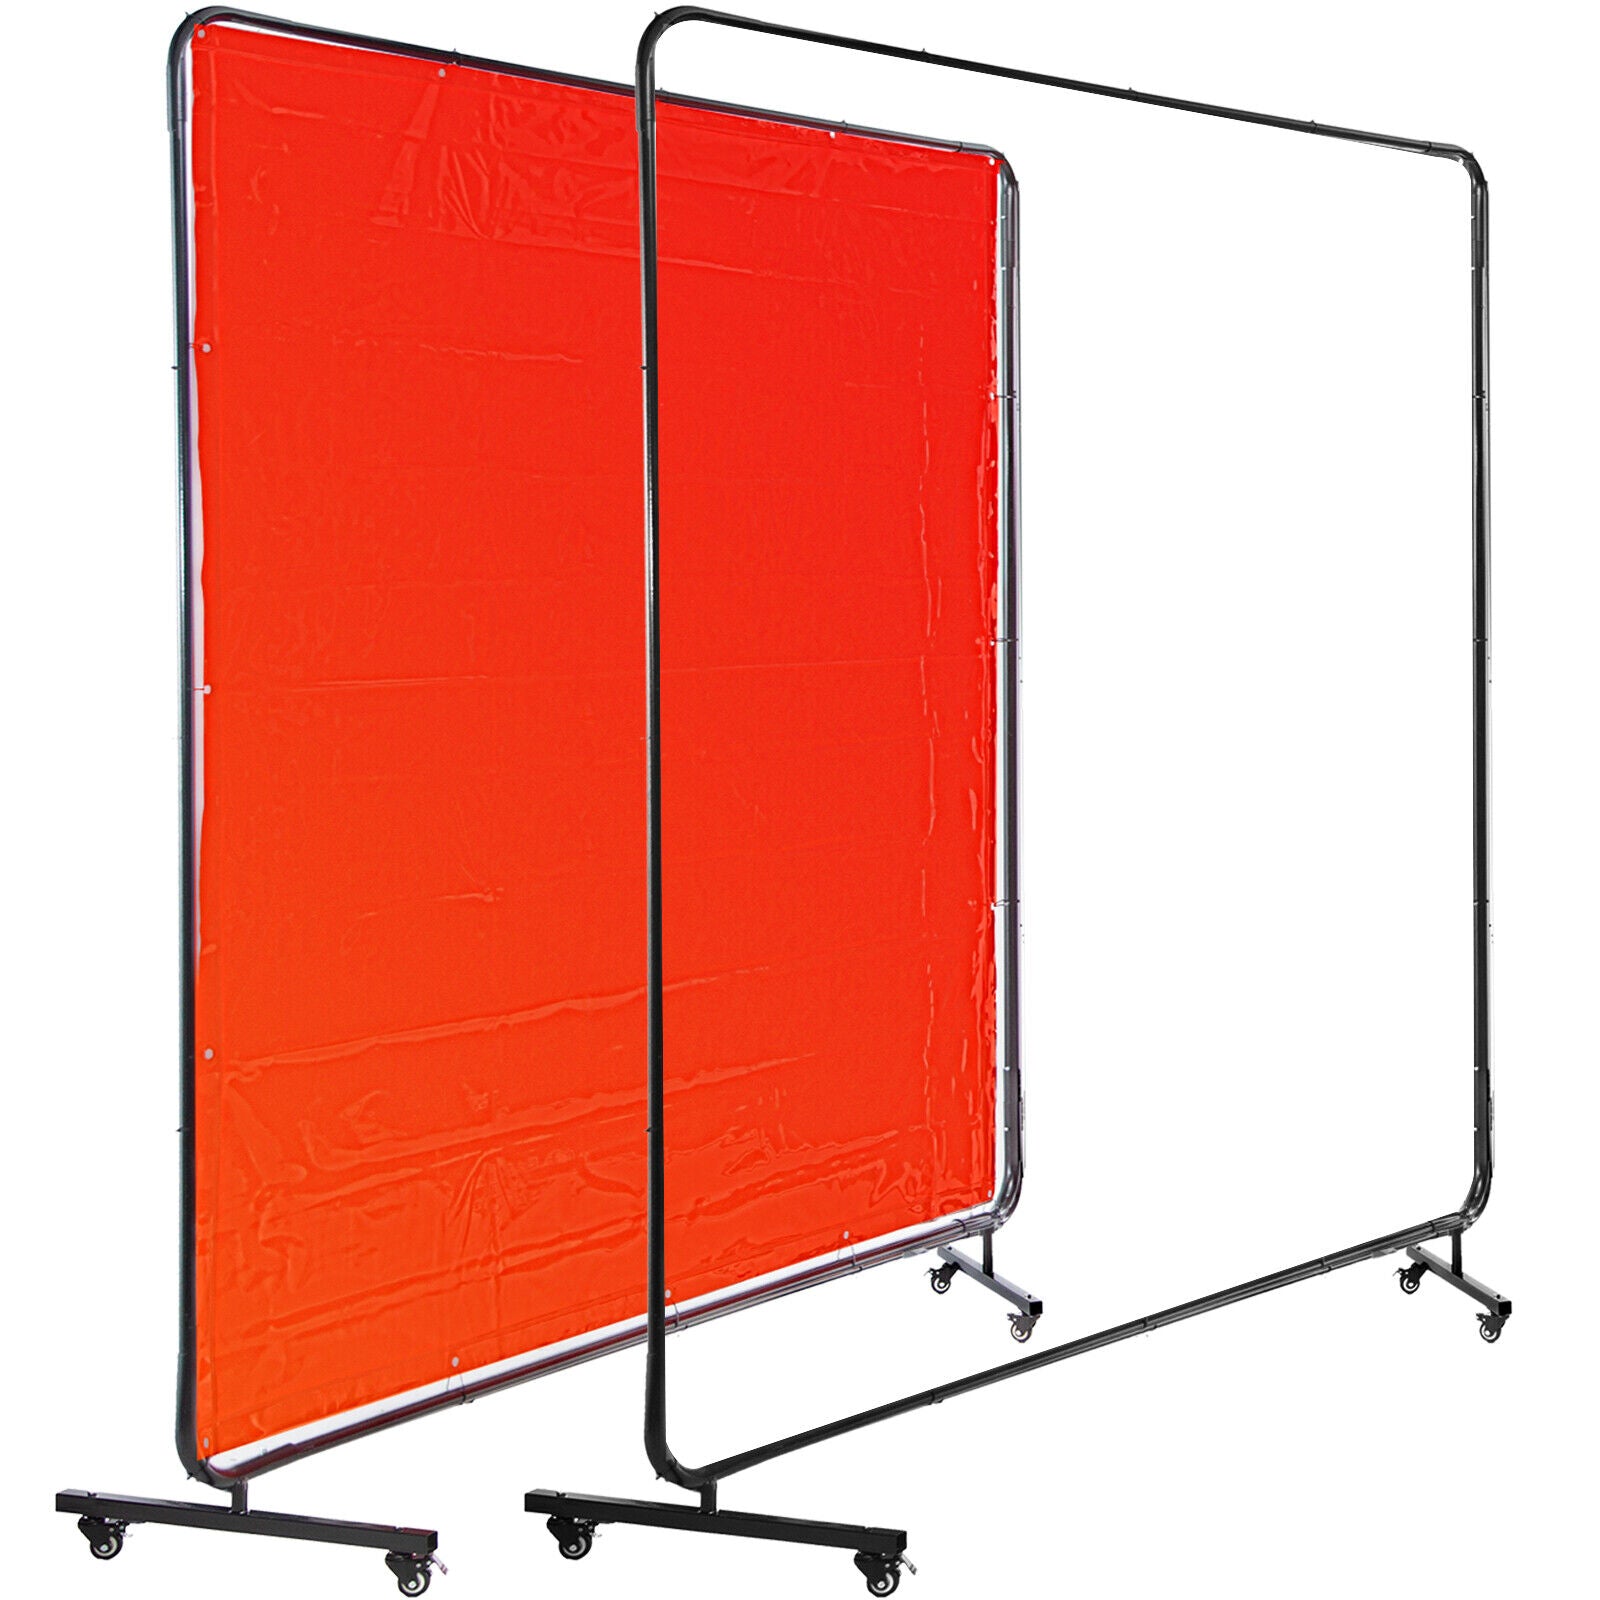 3 Panel 1.83 x 1.83 m Flame Retardant Welding Screen Welding Curtain